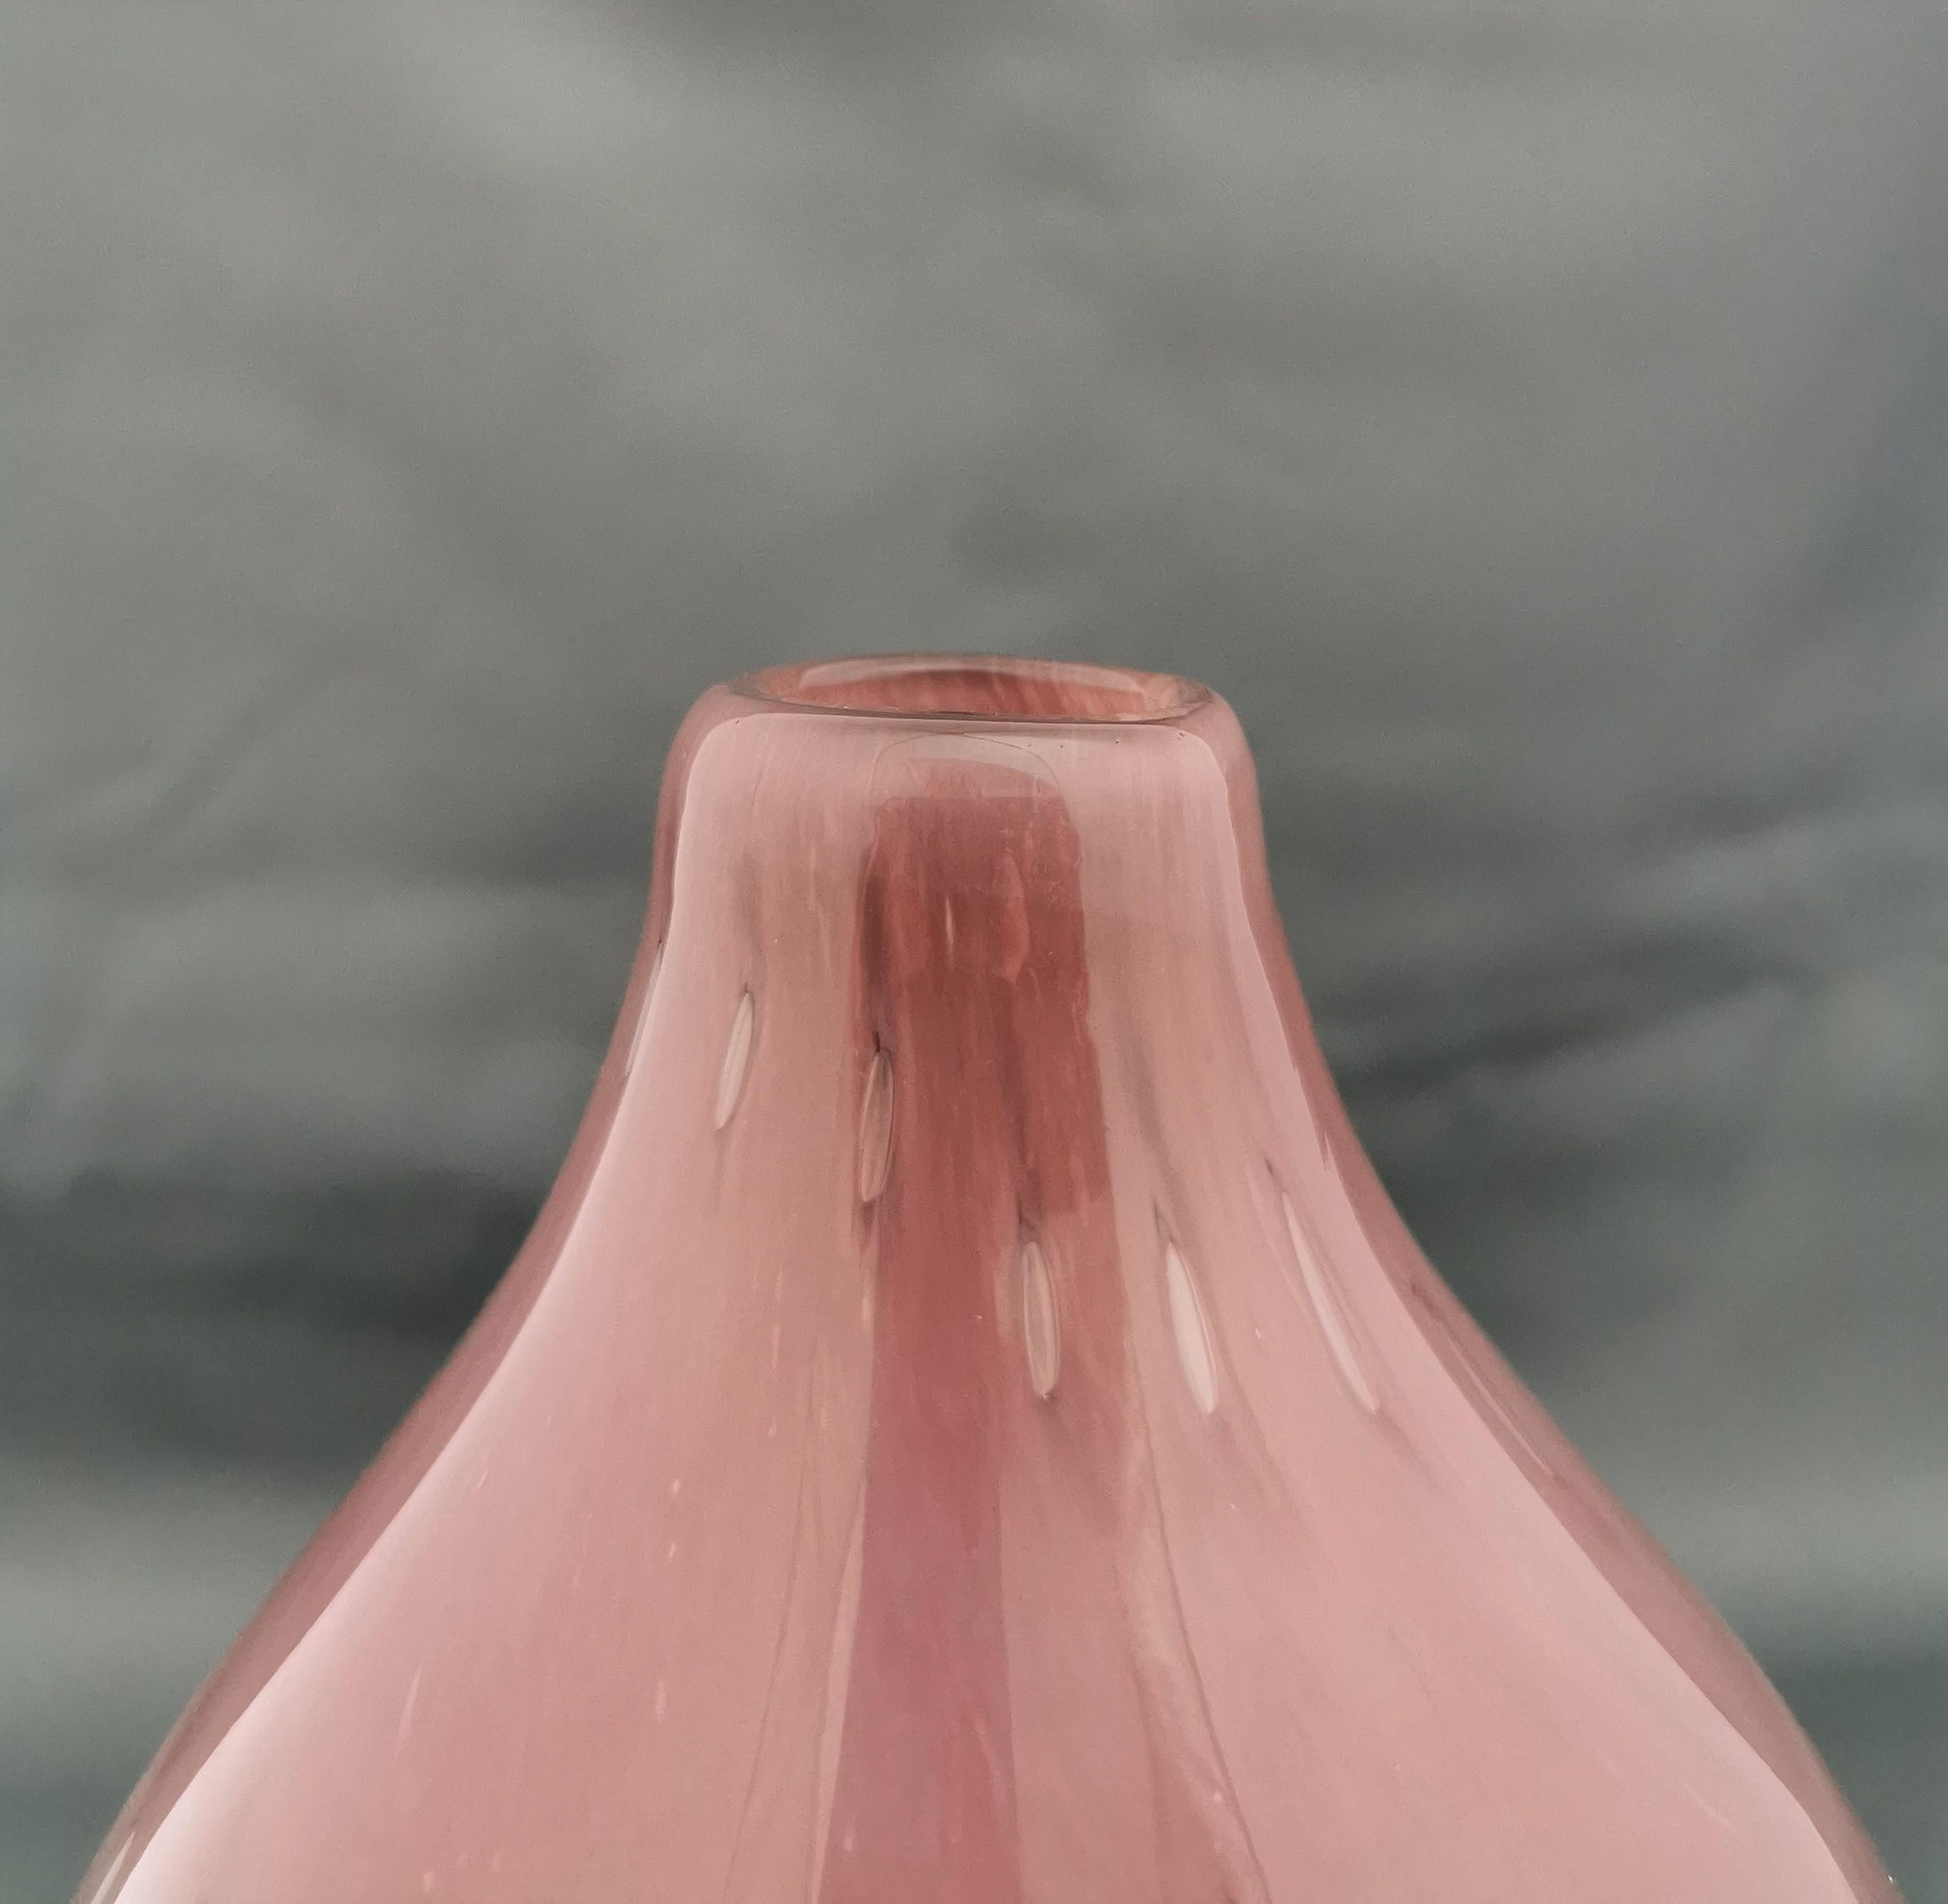 20th Century Vase Murano Glass Pink Decorative Object Italian Design, 1970s For Sale